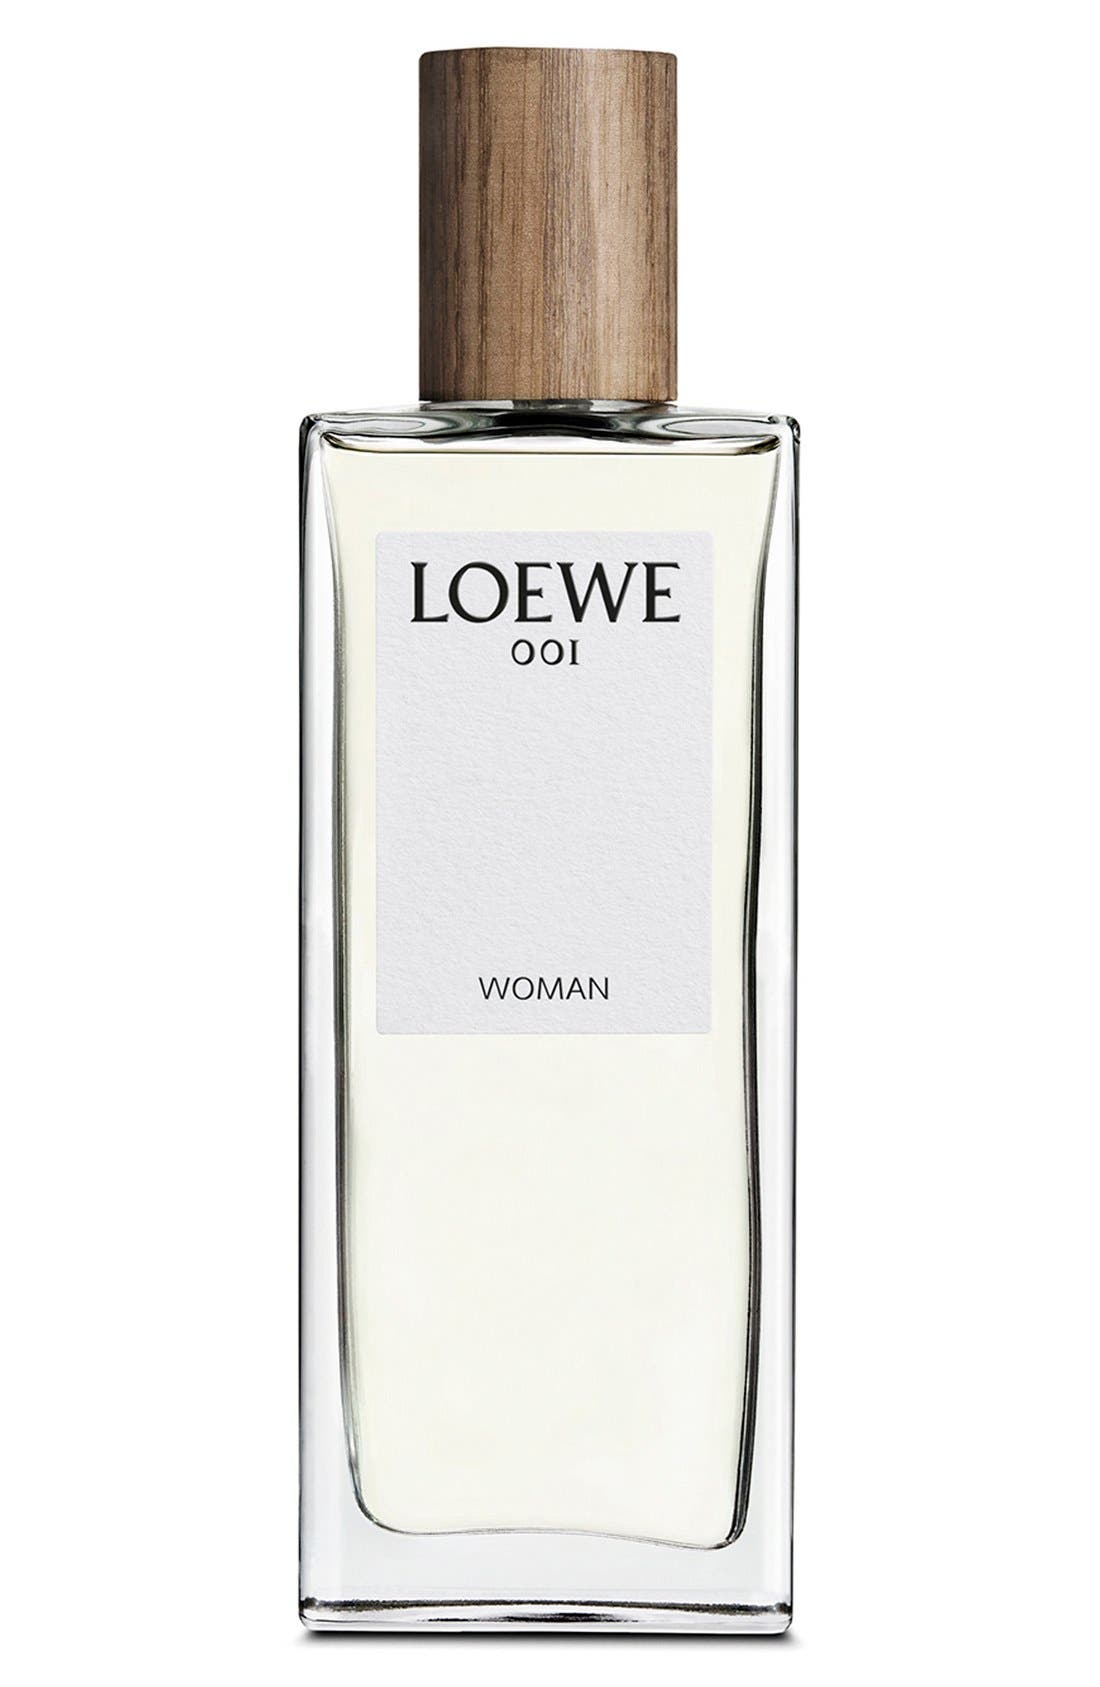 loewe 001 woman sephora